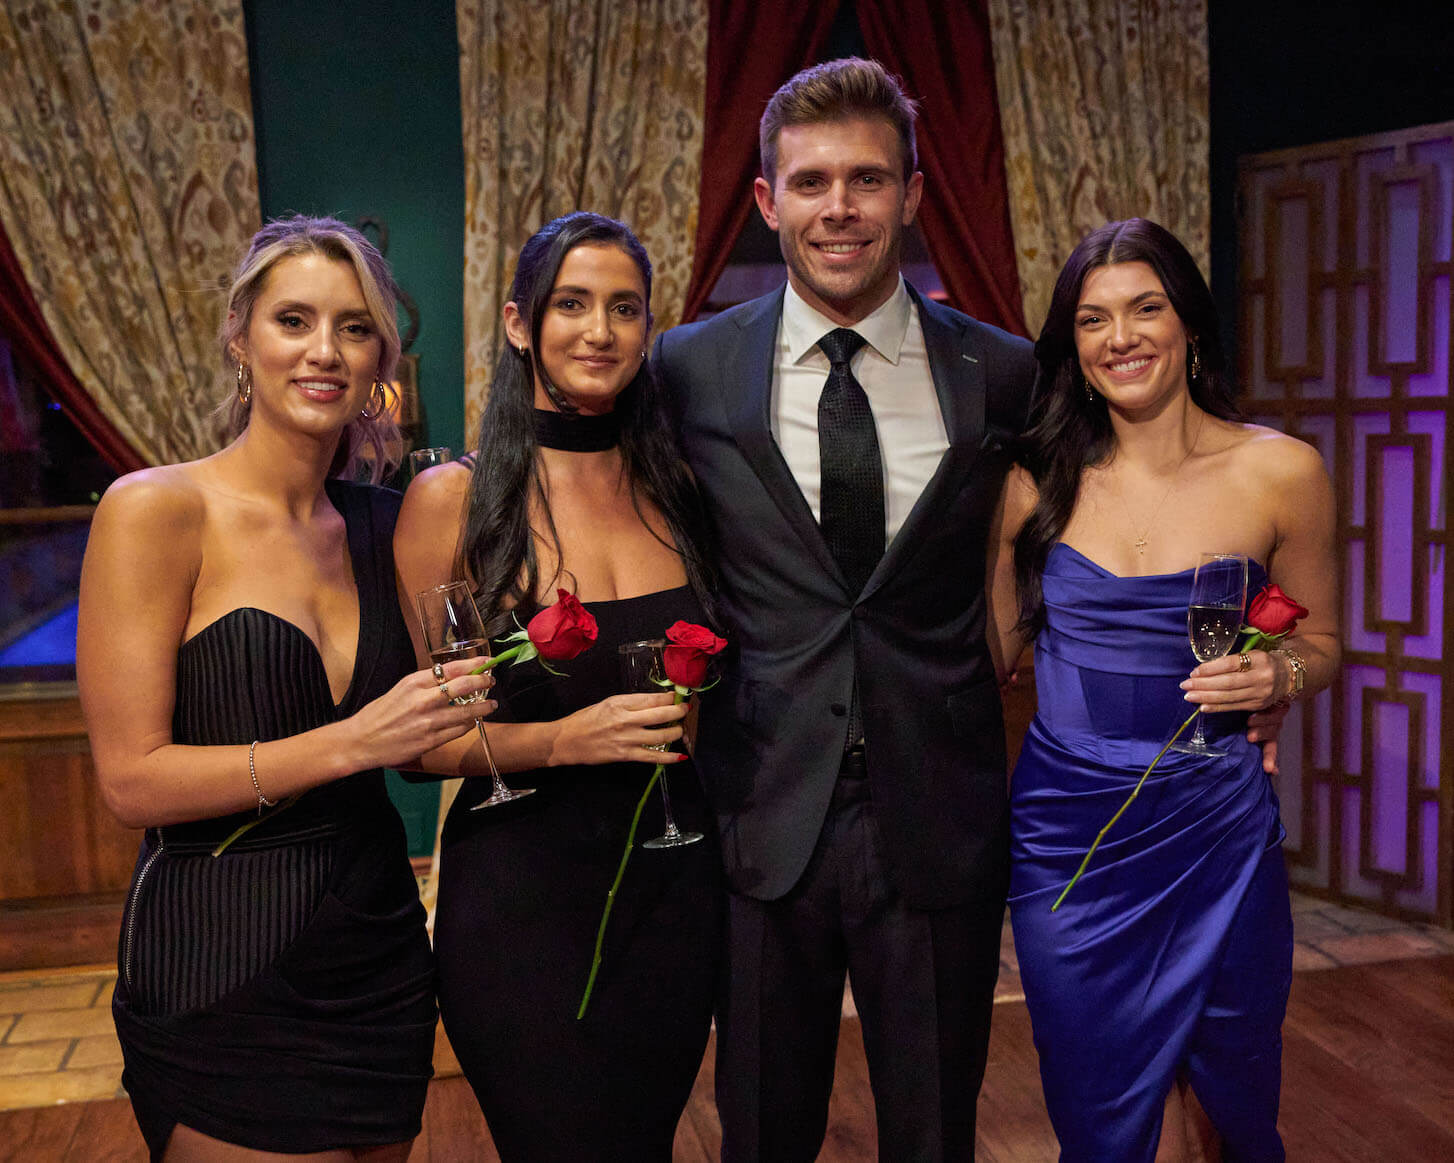 Kaity Biggar, Ariel Frenkel, Zach Shallcross, and Gabi Elnicki standing together. The 3 women head to 'The Bachelor' Season 27 Fantasy Suites